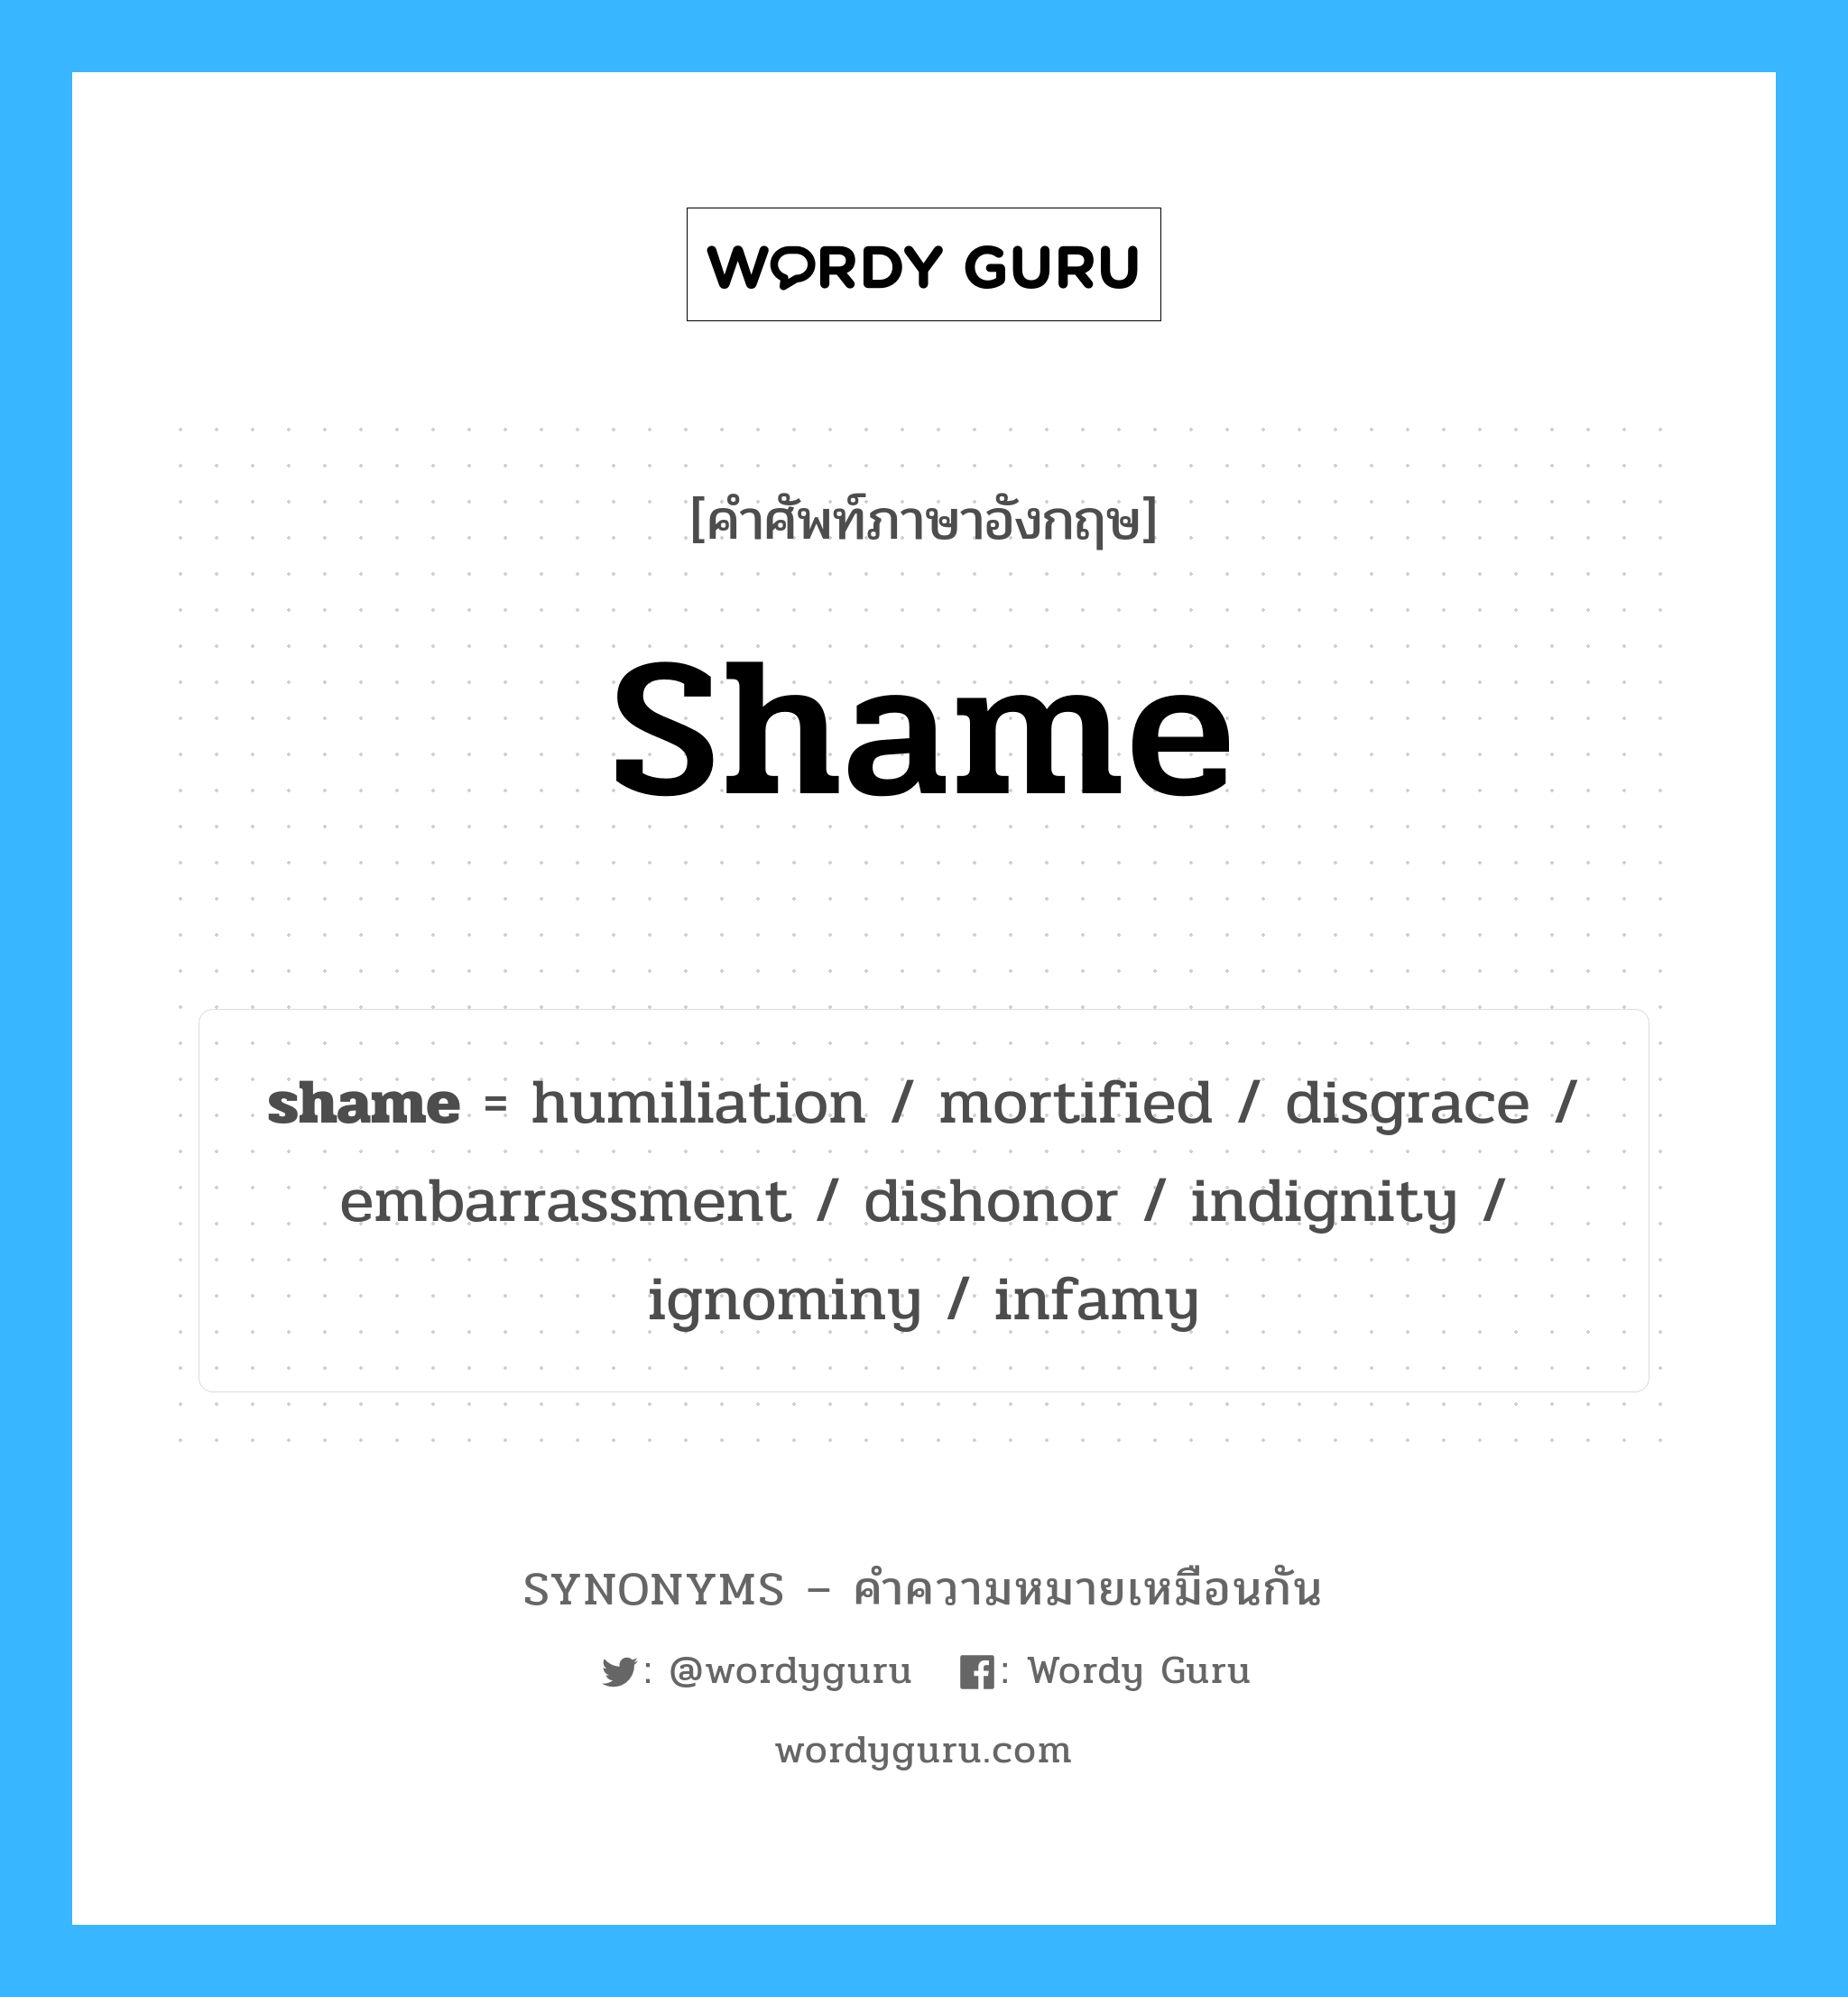 mortified เป็นหนึ่งใน shame และมีคำอื่น ๆ อีกดังนี้, คำศัพท์ภาษาอังกฤษ mortified ความหมายคล้ายกันกับ shame แปลว่า เสียใจ หมวด shame